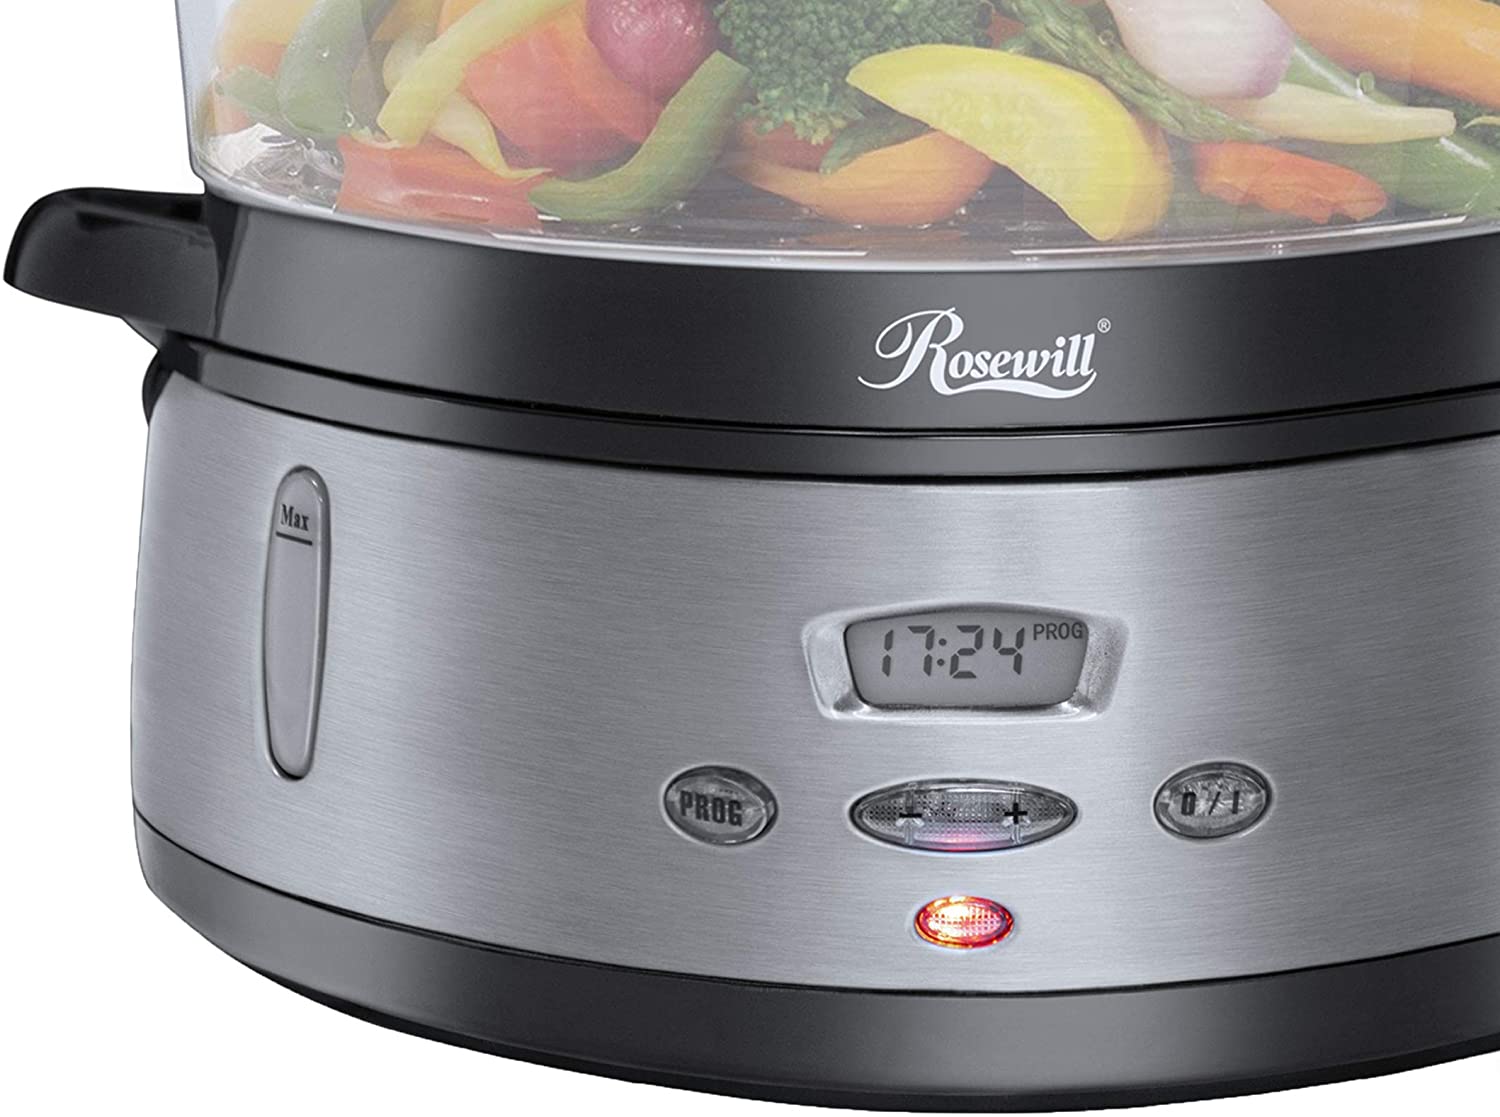 Rosewill 3-Tier Digital Food Steamer + Portable Clothes Steamer $29.99 + FSSS